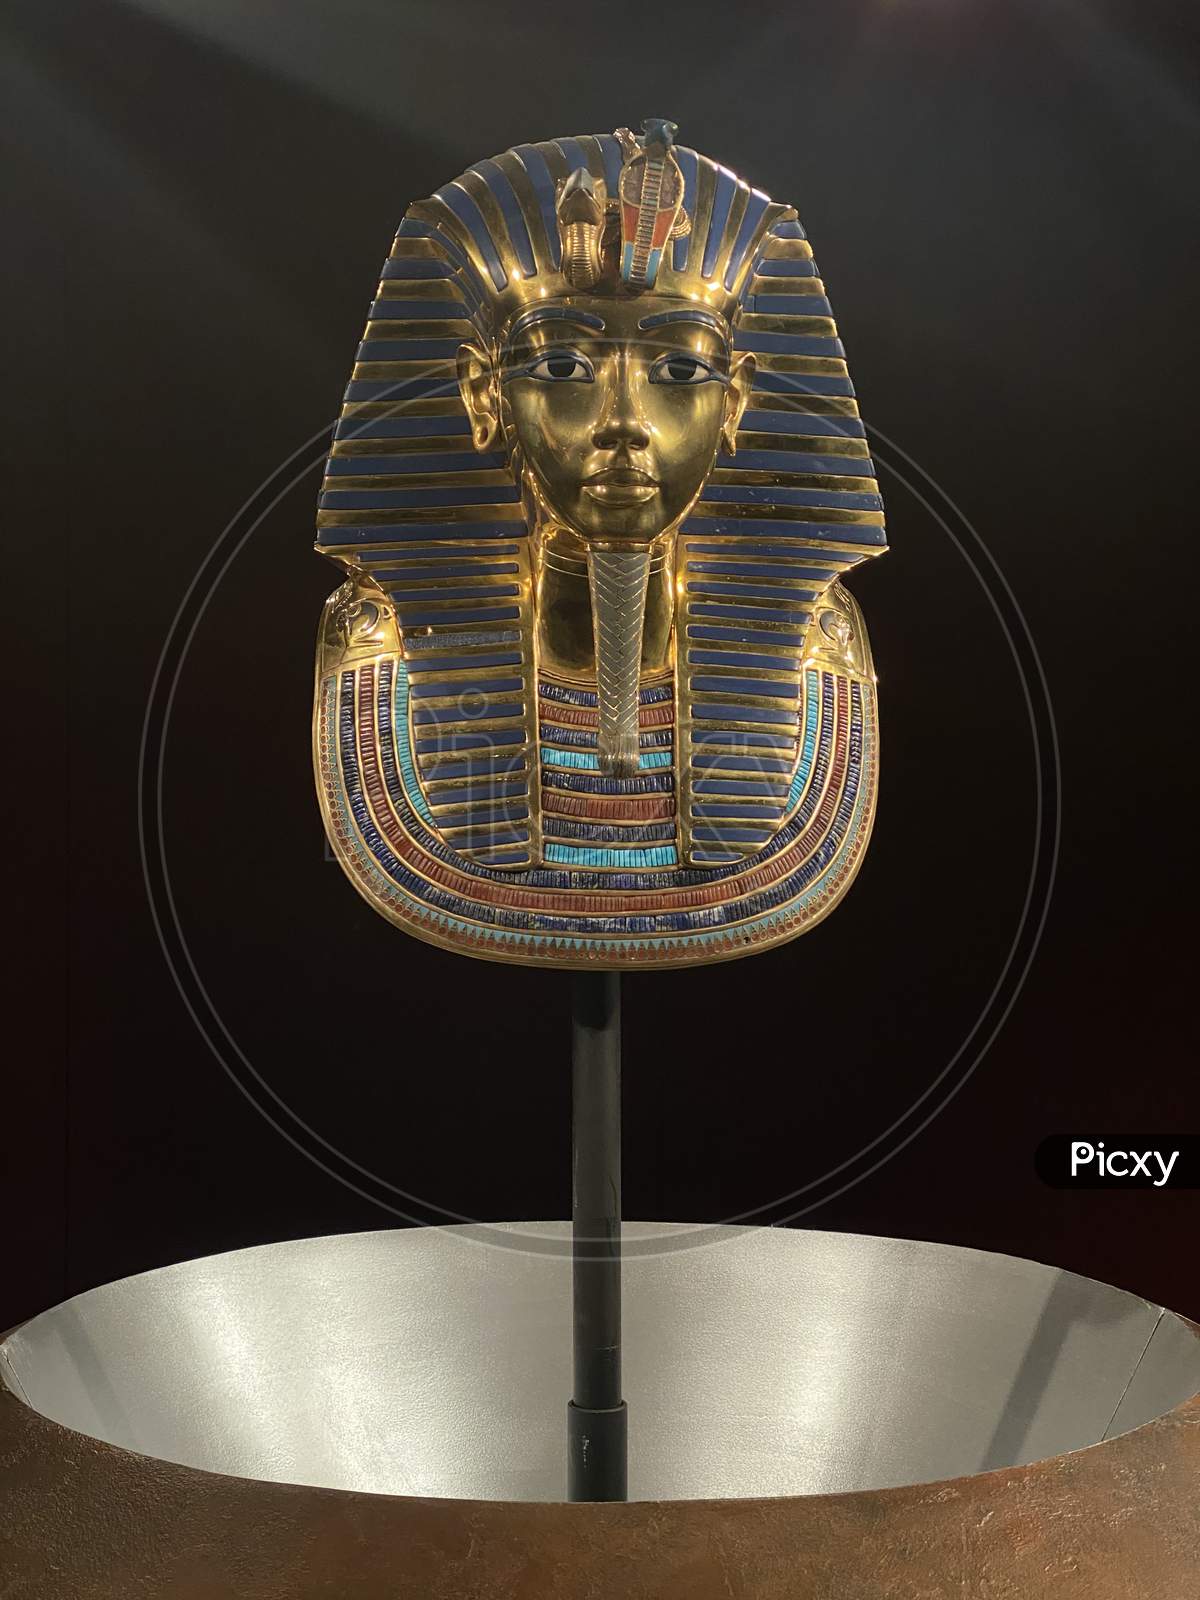 Gold Mask Of Tutanchamun On Black Background As Replica From Egypt Pharaoh. 14.03.2021 - Oerlikon, Switzerland.